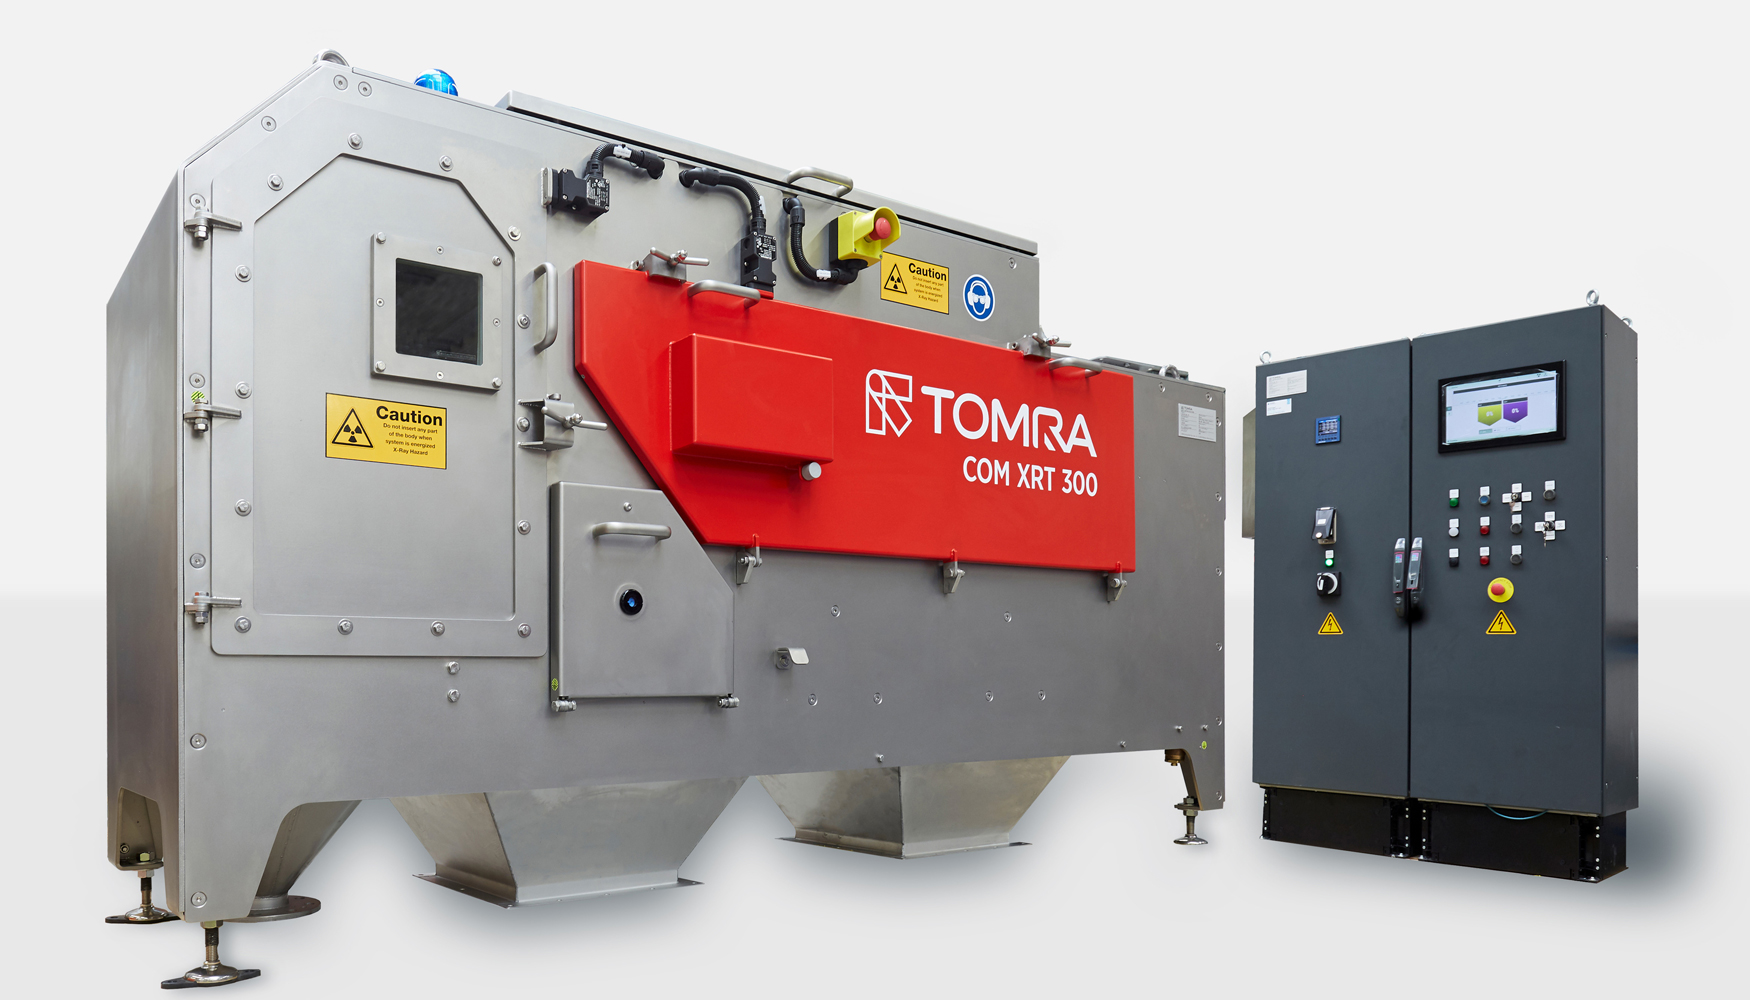 Tomra Sorting Mining ha lanzado la nueva clasificadora Final Recovery Tomra COM XRT 300 /FR...